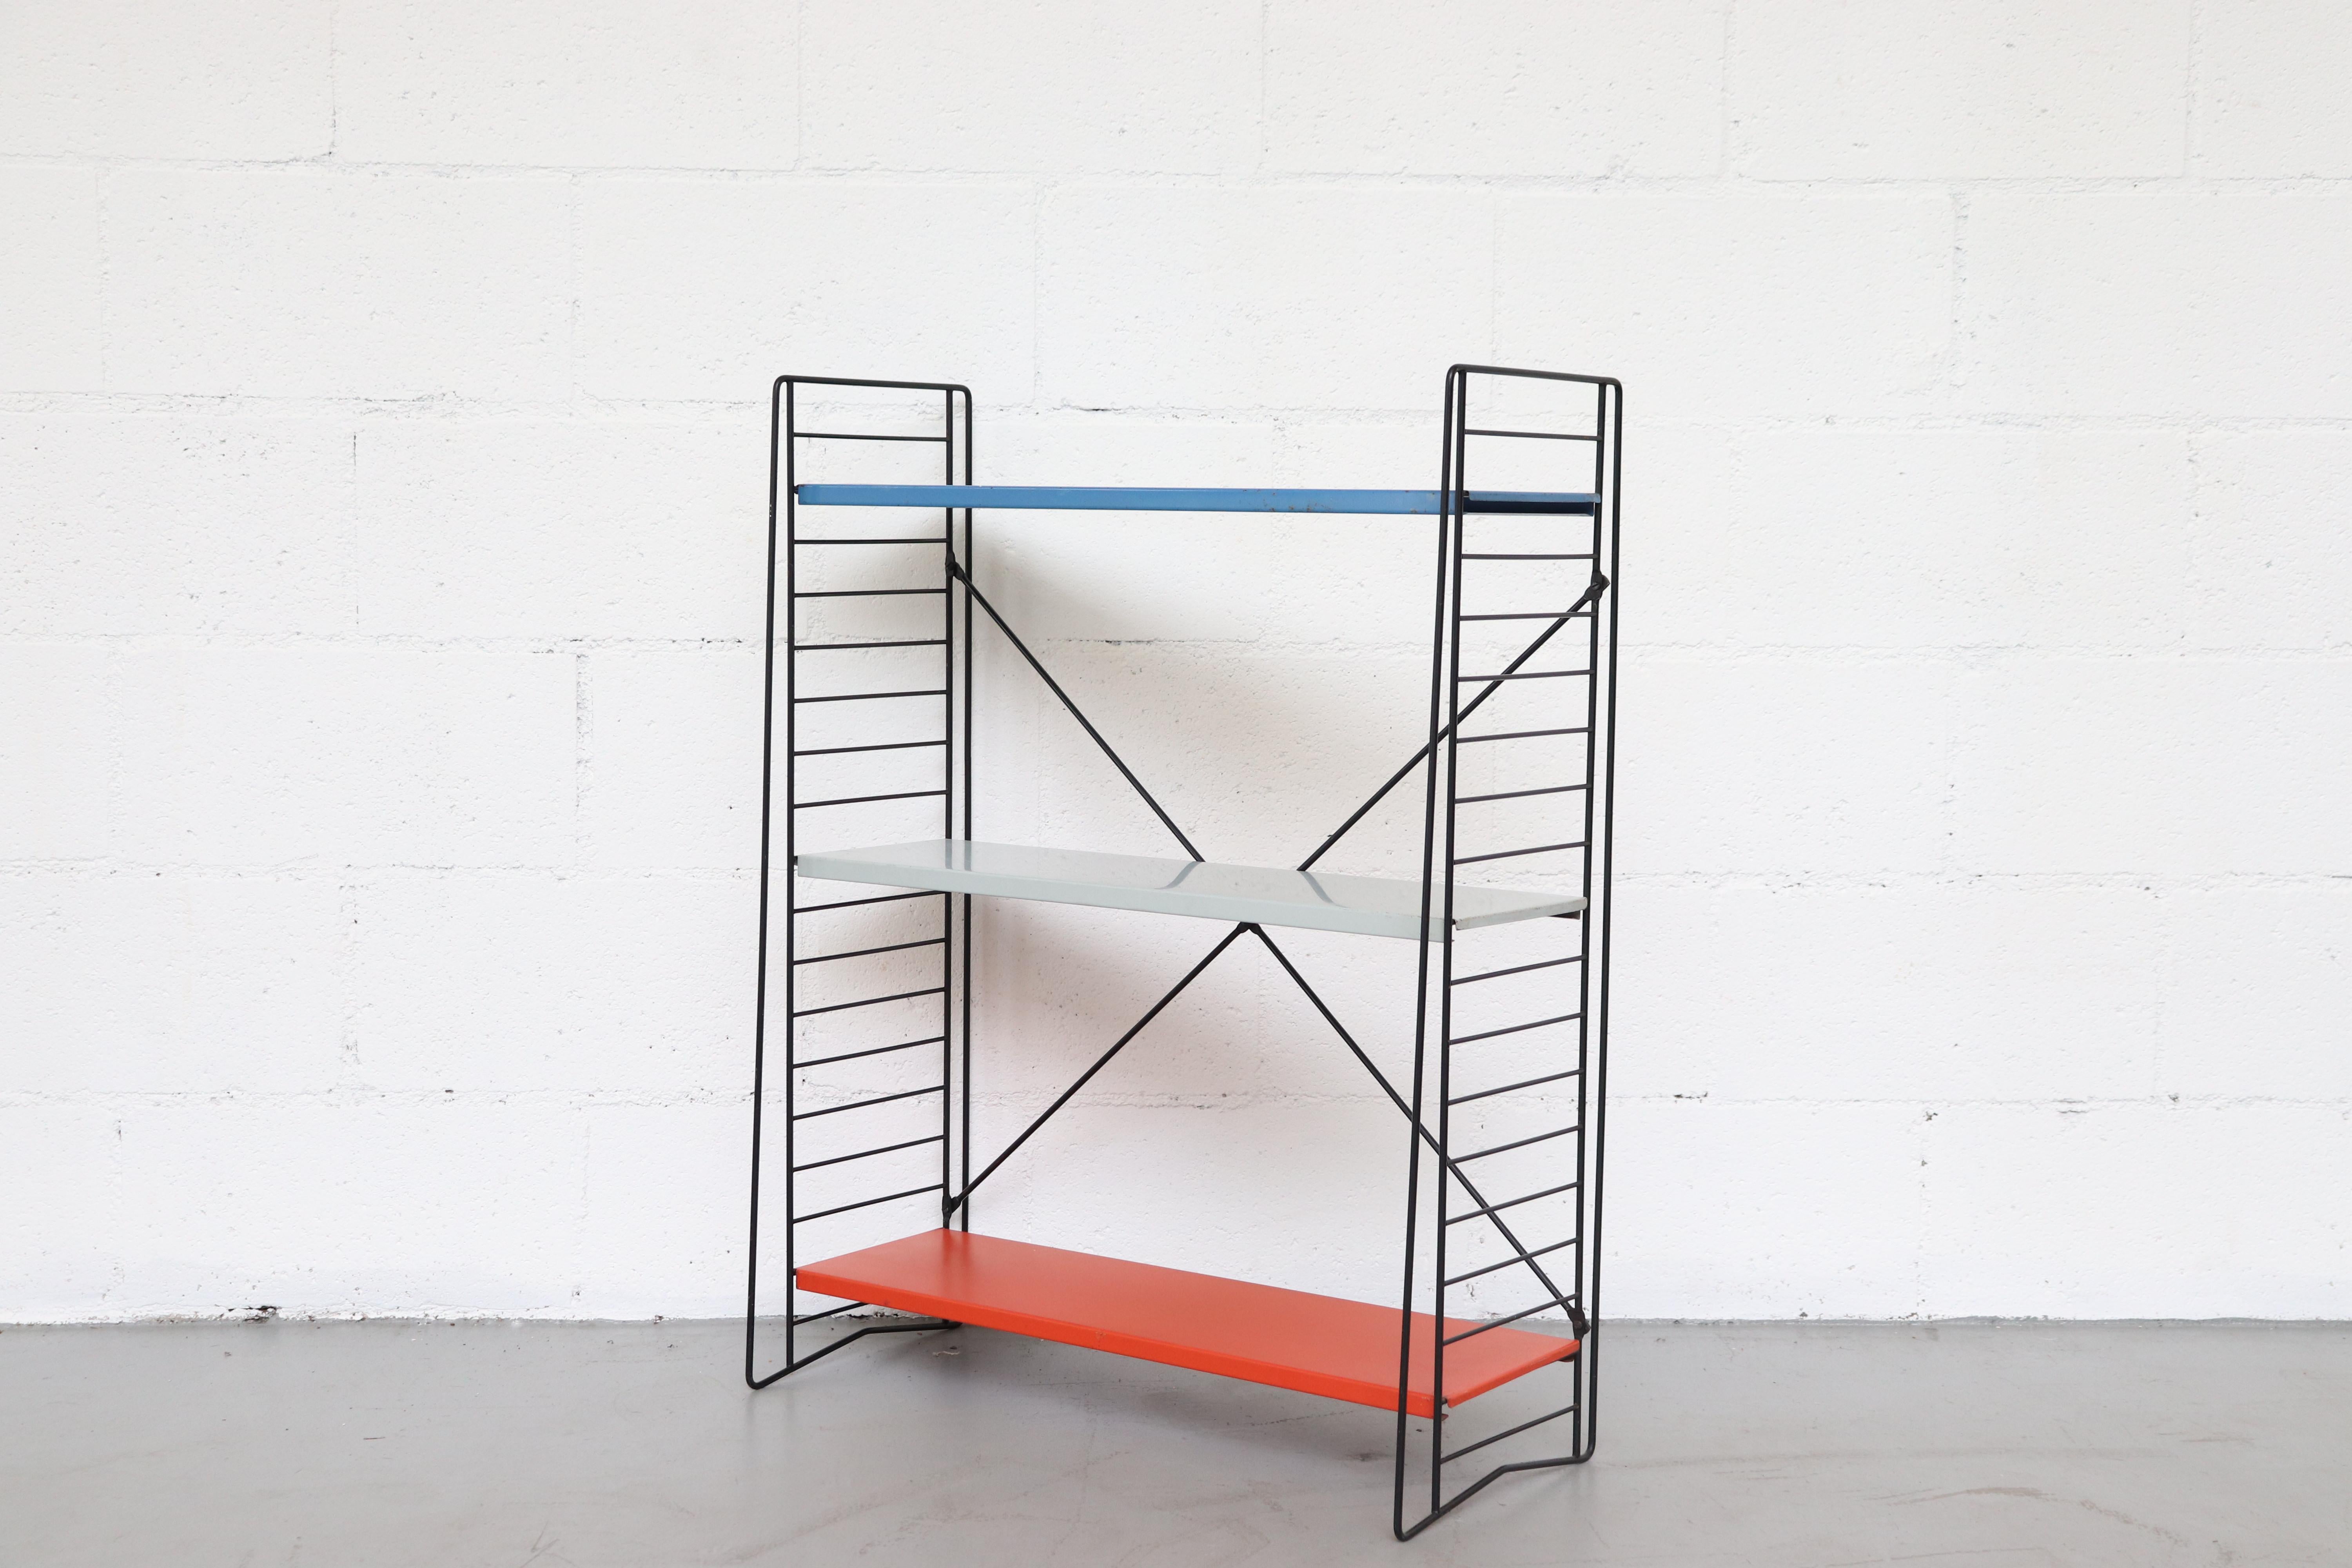 Tomado single standing industrial book shelf by Jan van der Togt; multicolored blue, grey, orange enameled metal shelves with black wire stands. Shelves are moveable.